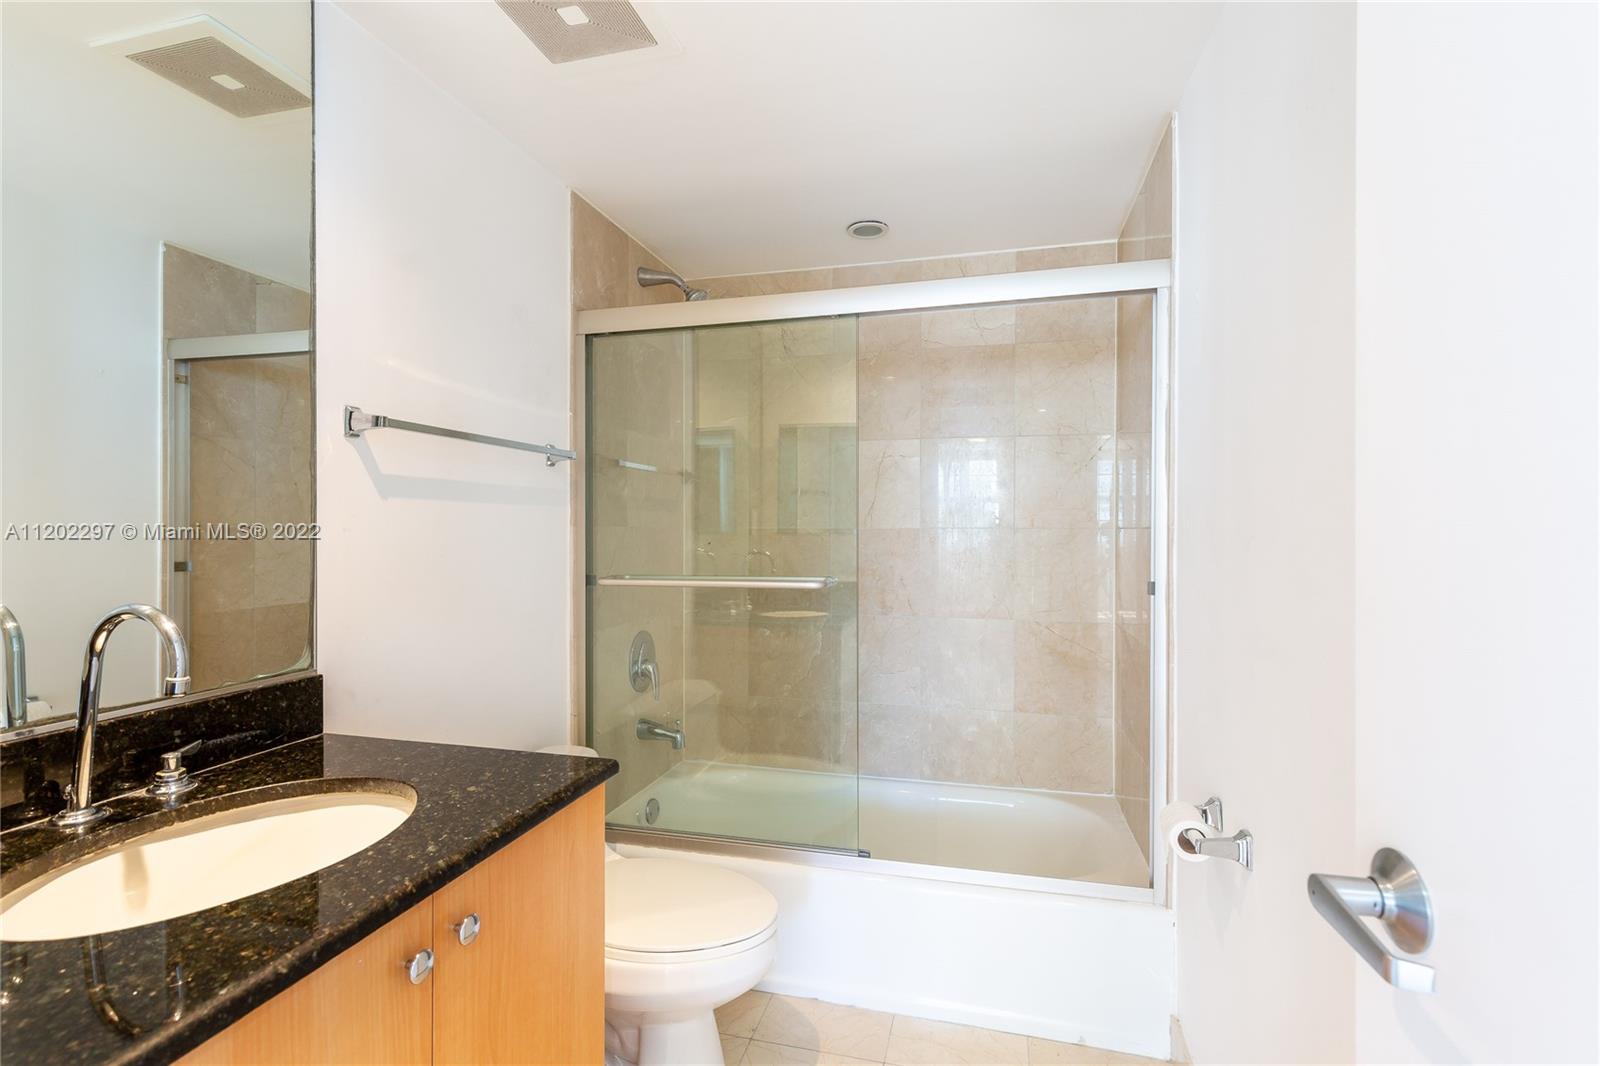 a bathroom with a granite countertop bathtub shower sink mirror vanity and toilet